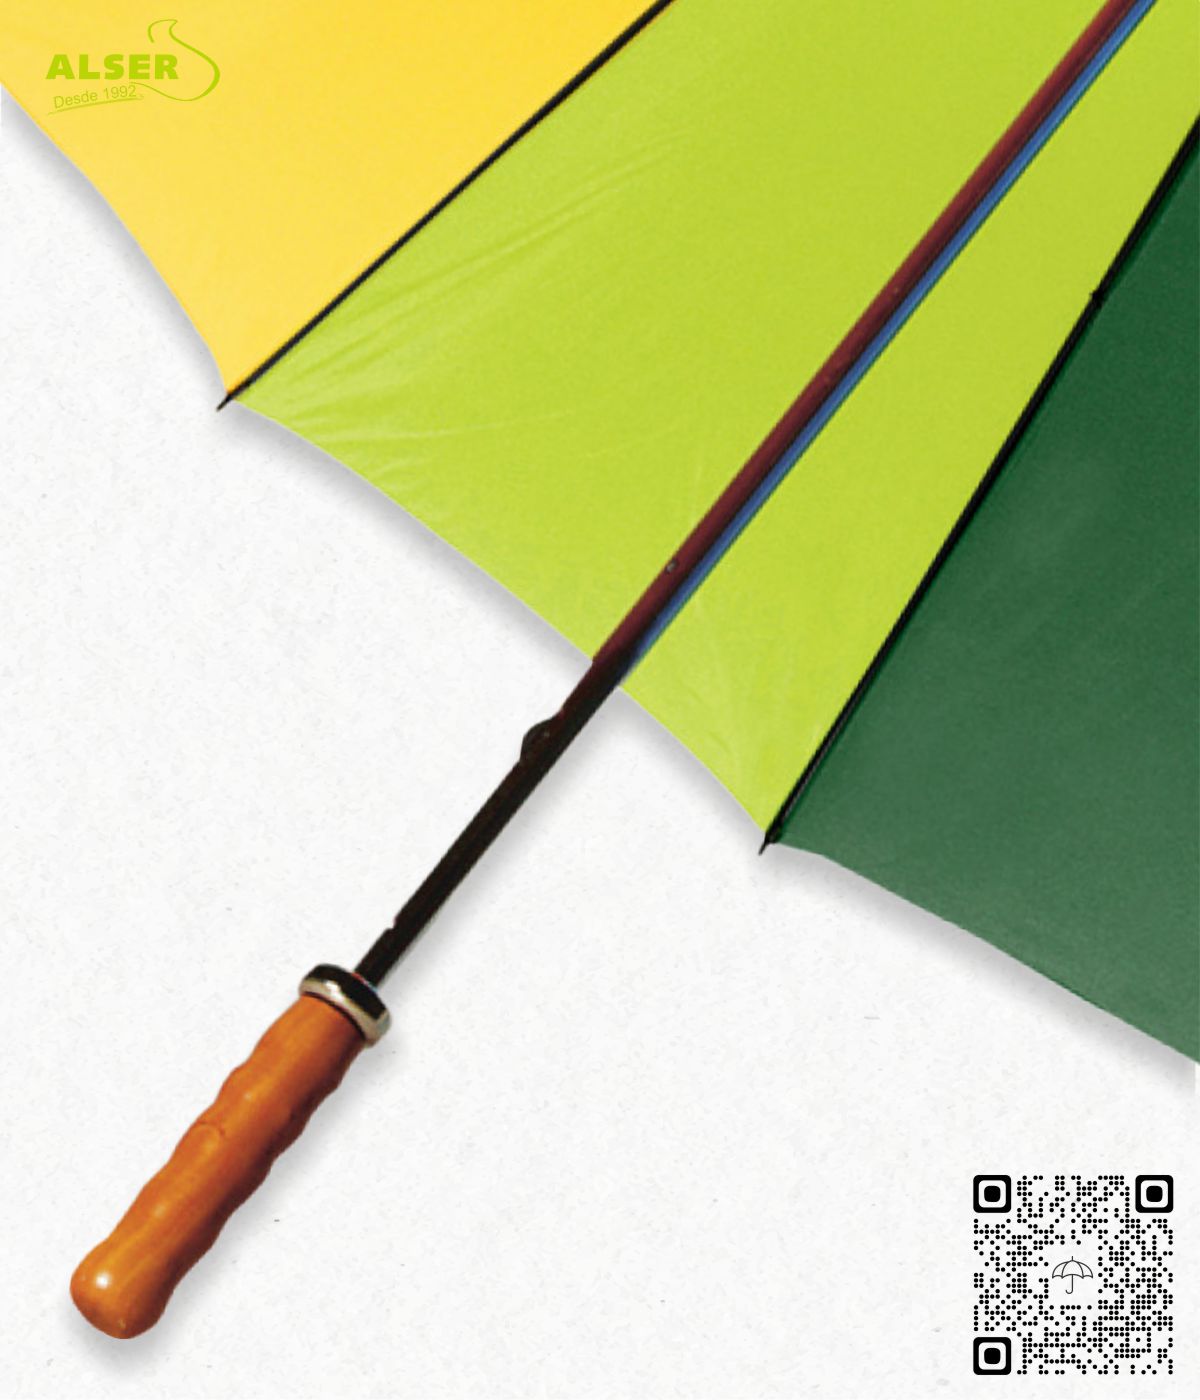 Paraguas Multicolor